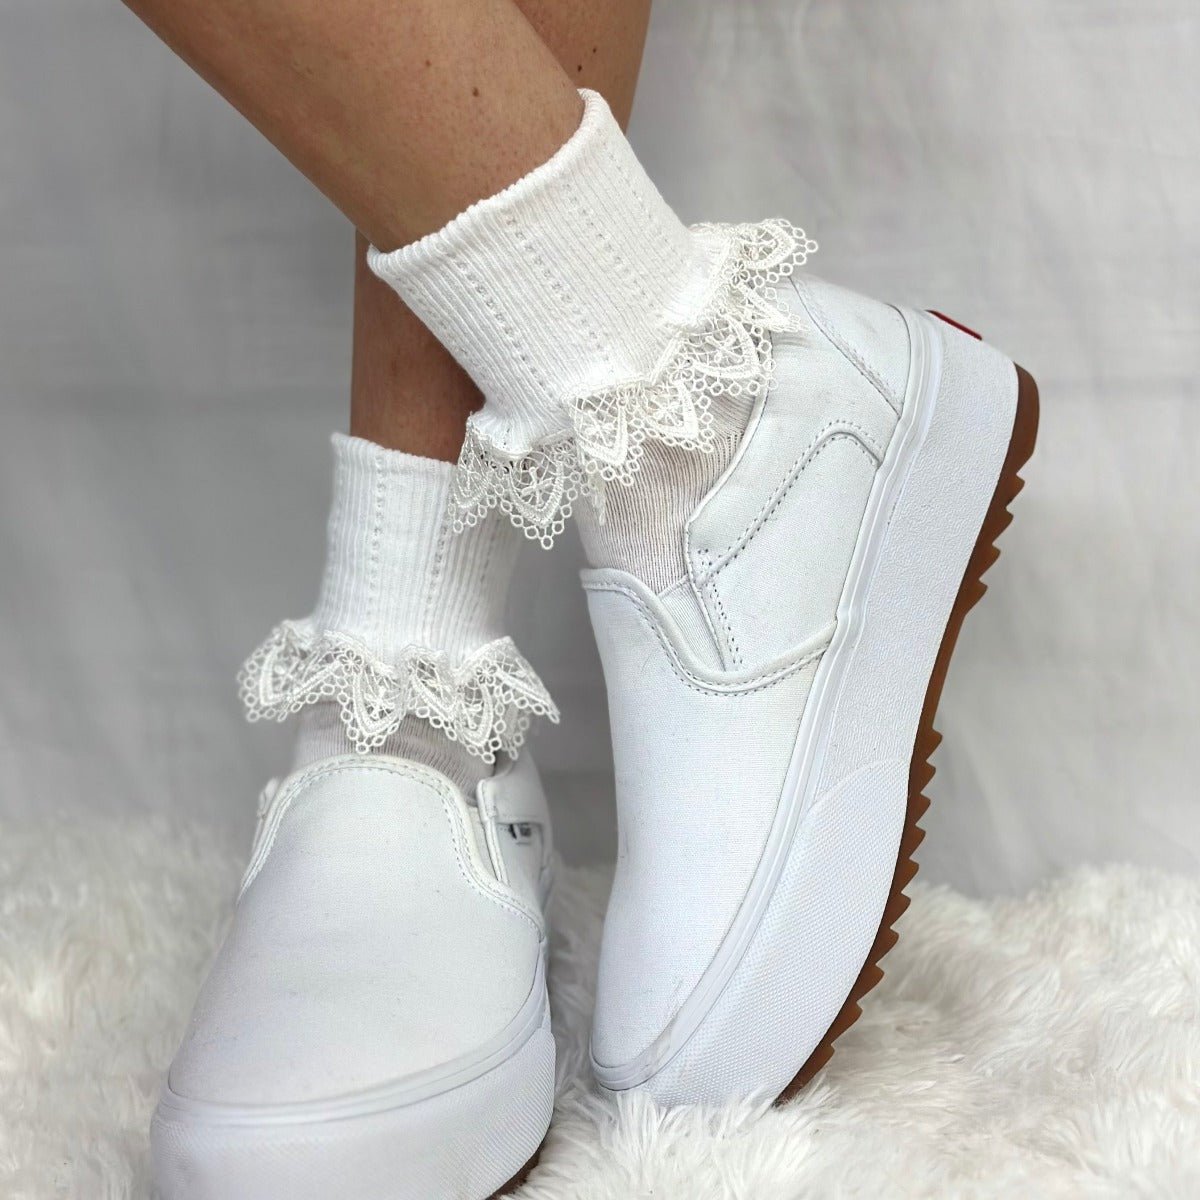 Chantilly  lace ankle cuff socks women - white , cute lace cuff socks